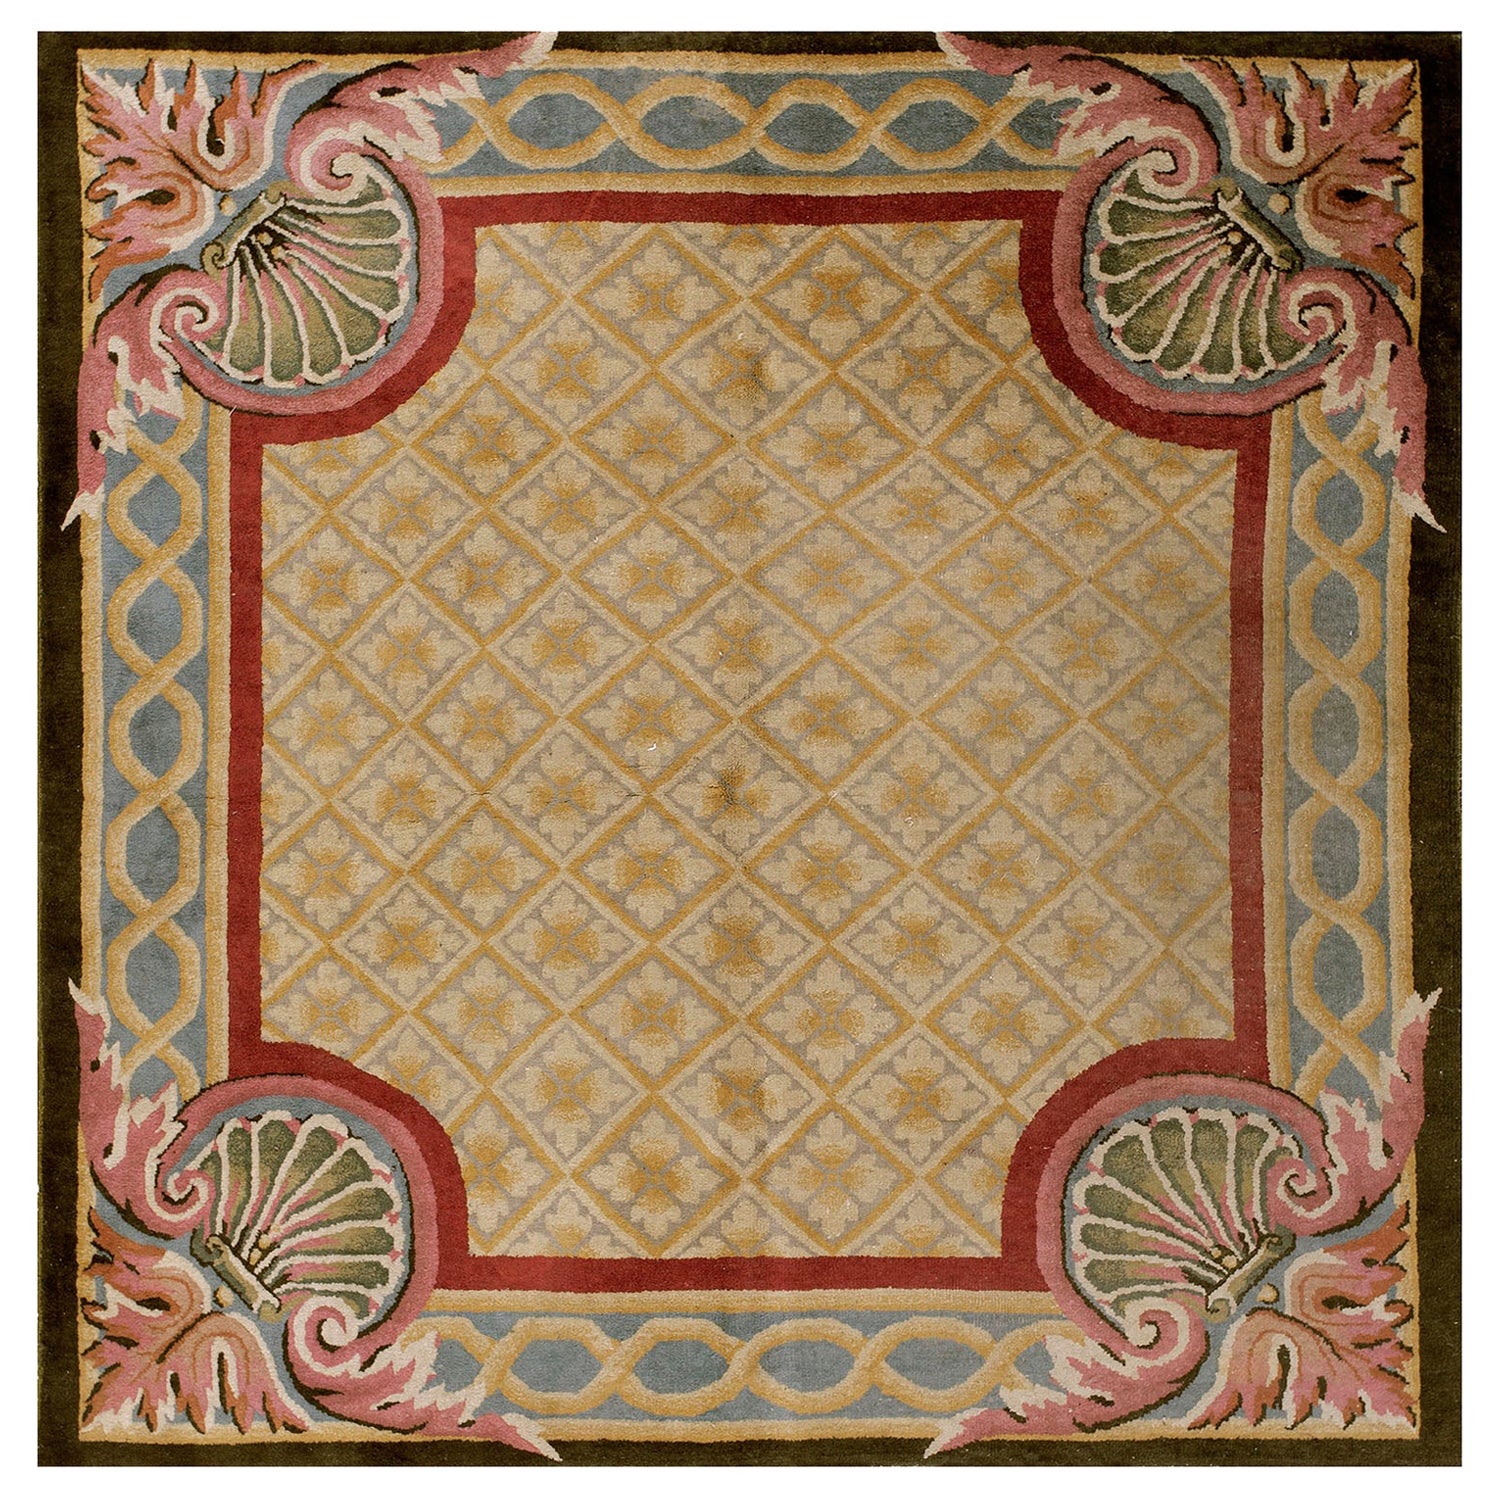 1920s Chinese Art Deco Carpet ( 5'7" x 5'7" - 170 x 170 cm ) For Sale